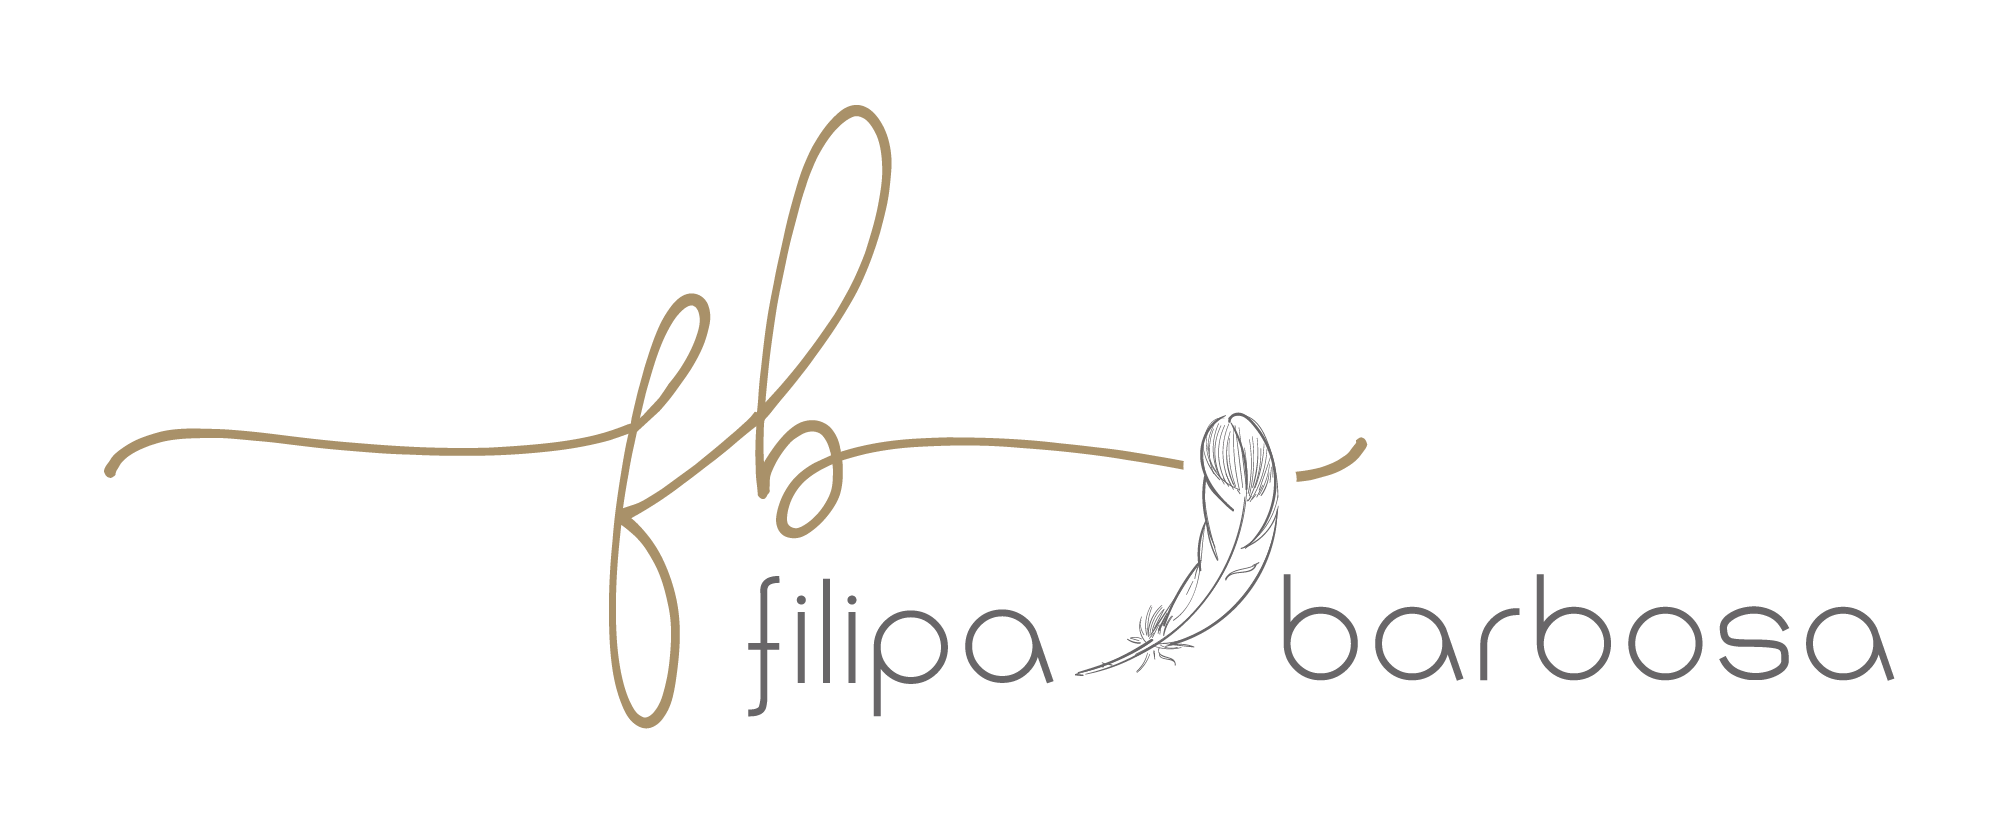 filipa_barbosa_logotipo